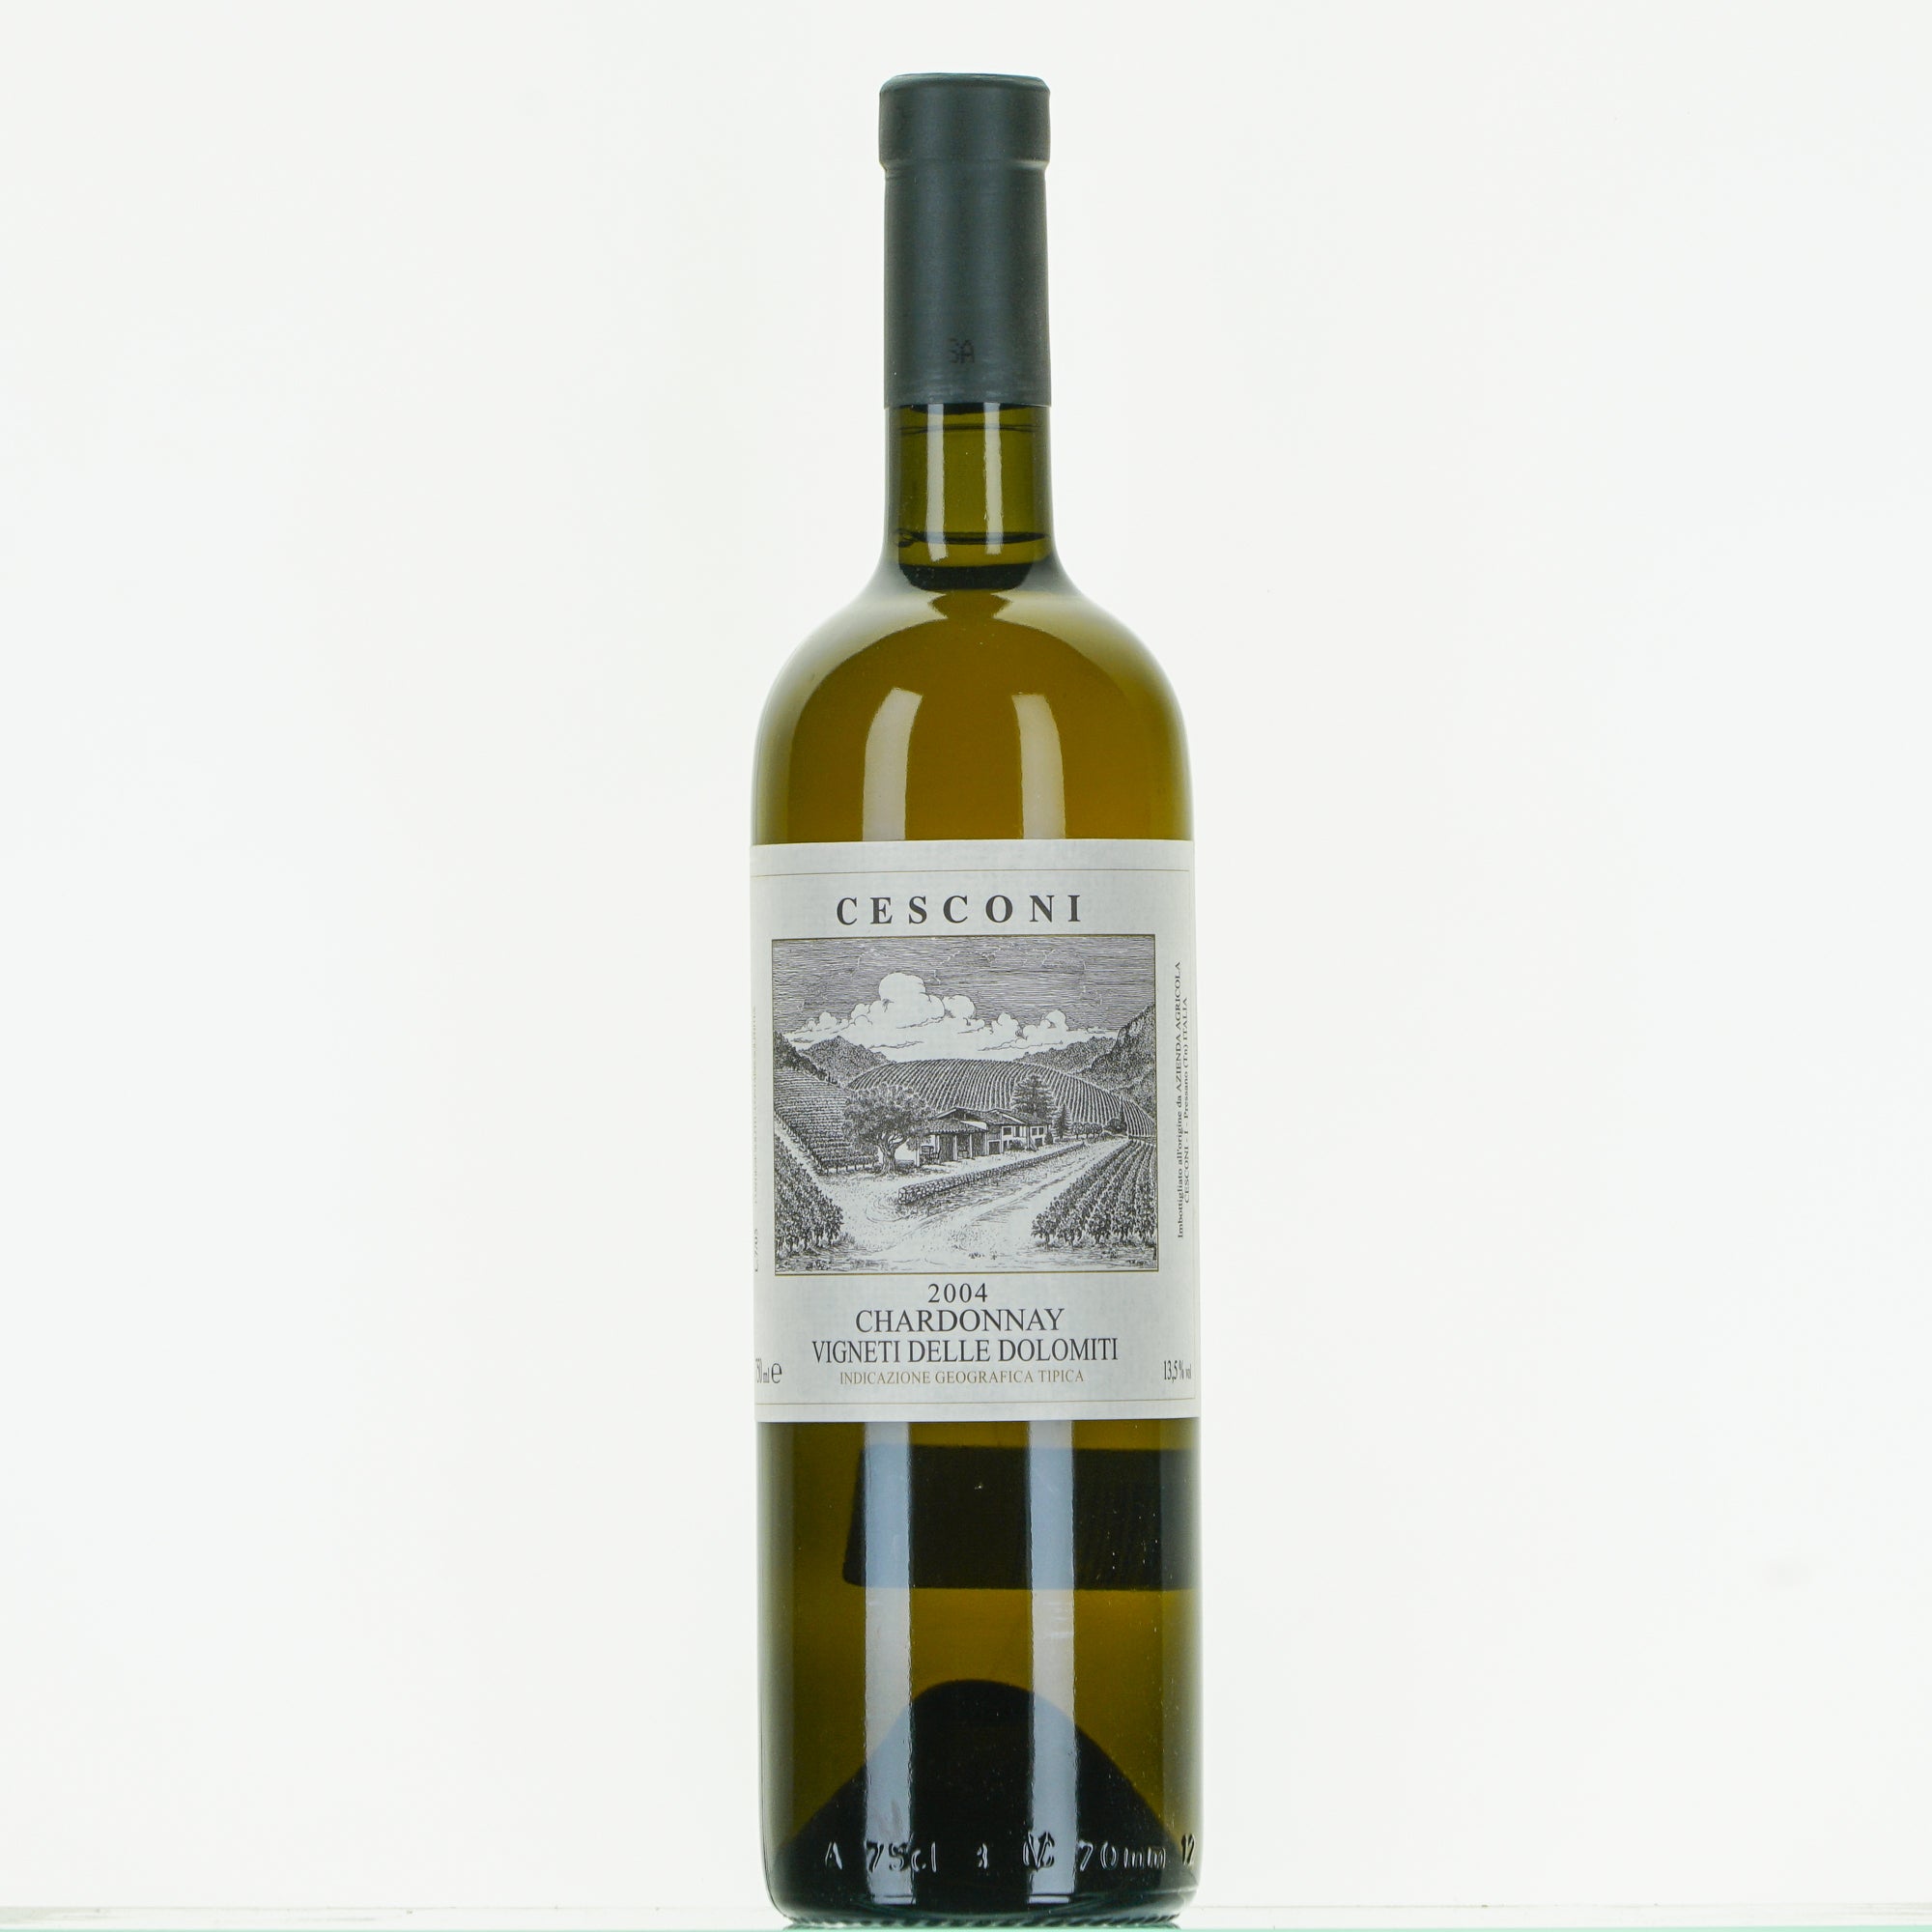 Chardonnay 2004 Vigneti delle Dolomiti igt Cesconi lt.0.750